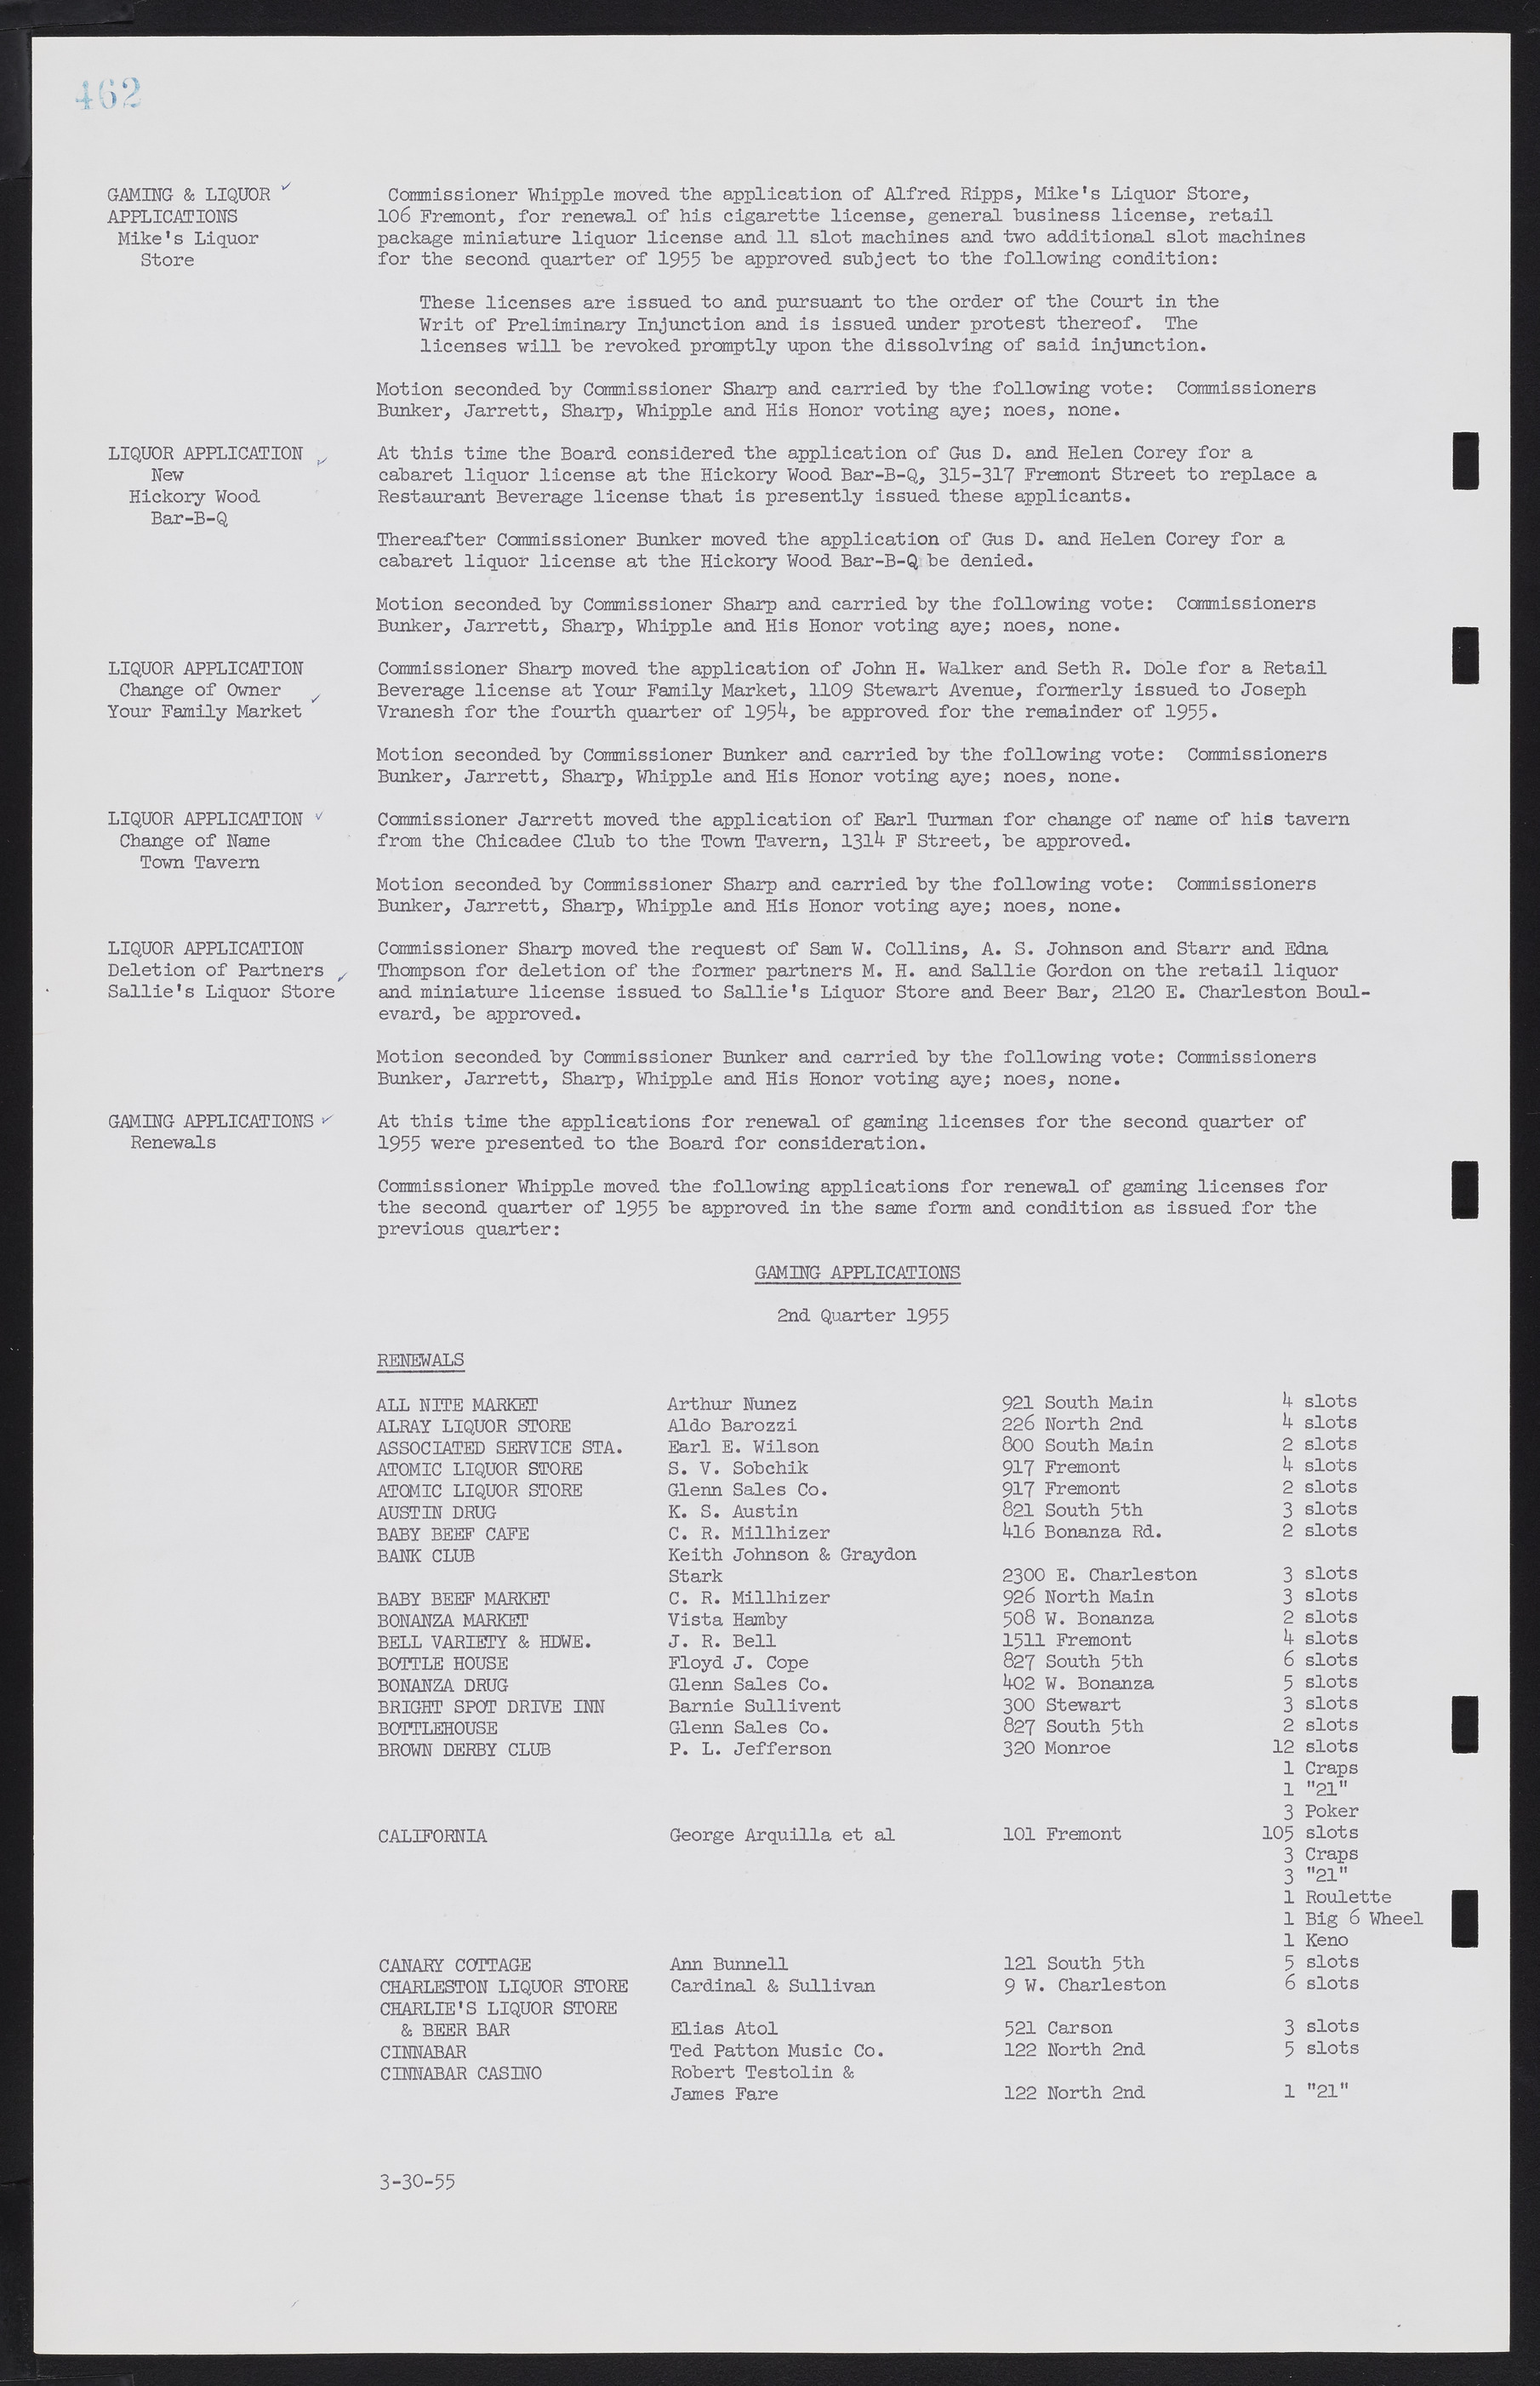 Las Vegas City Commission Minutes, February 17, 1954 to September 21, 1955, lvc000009-468